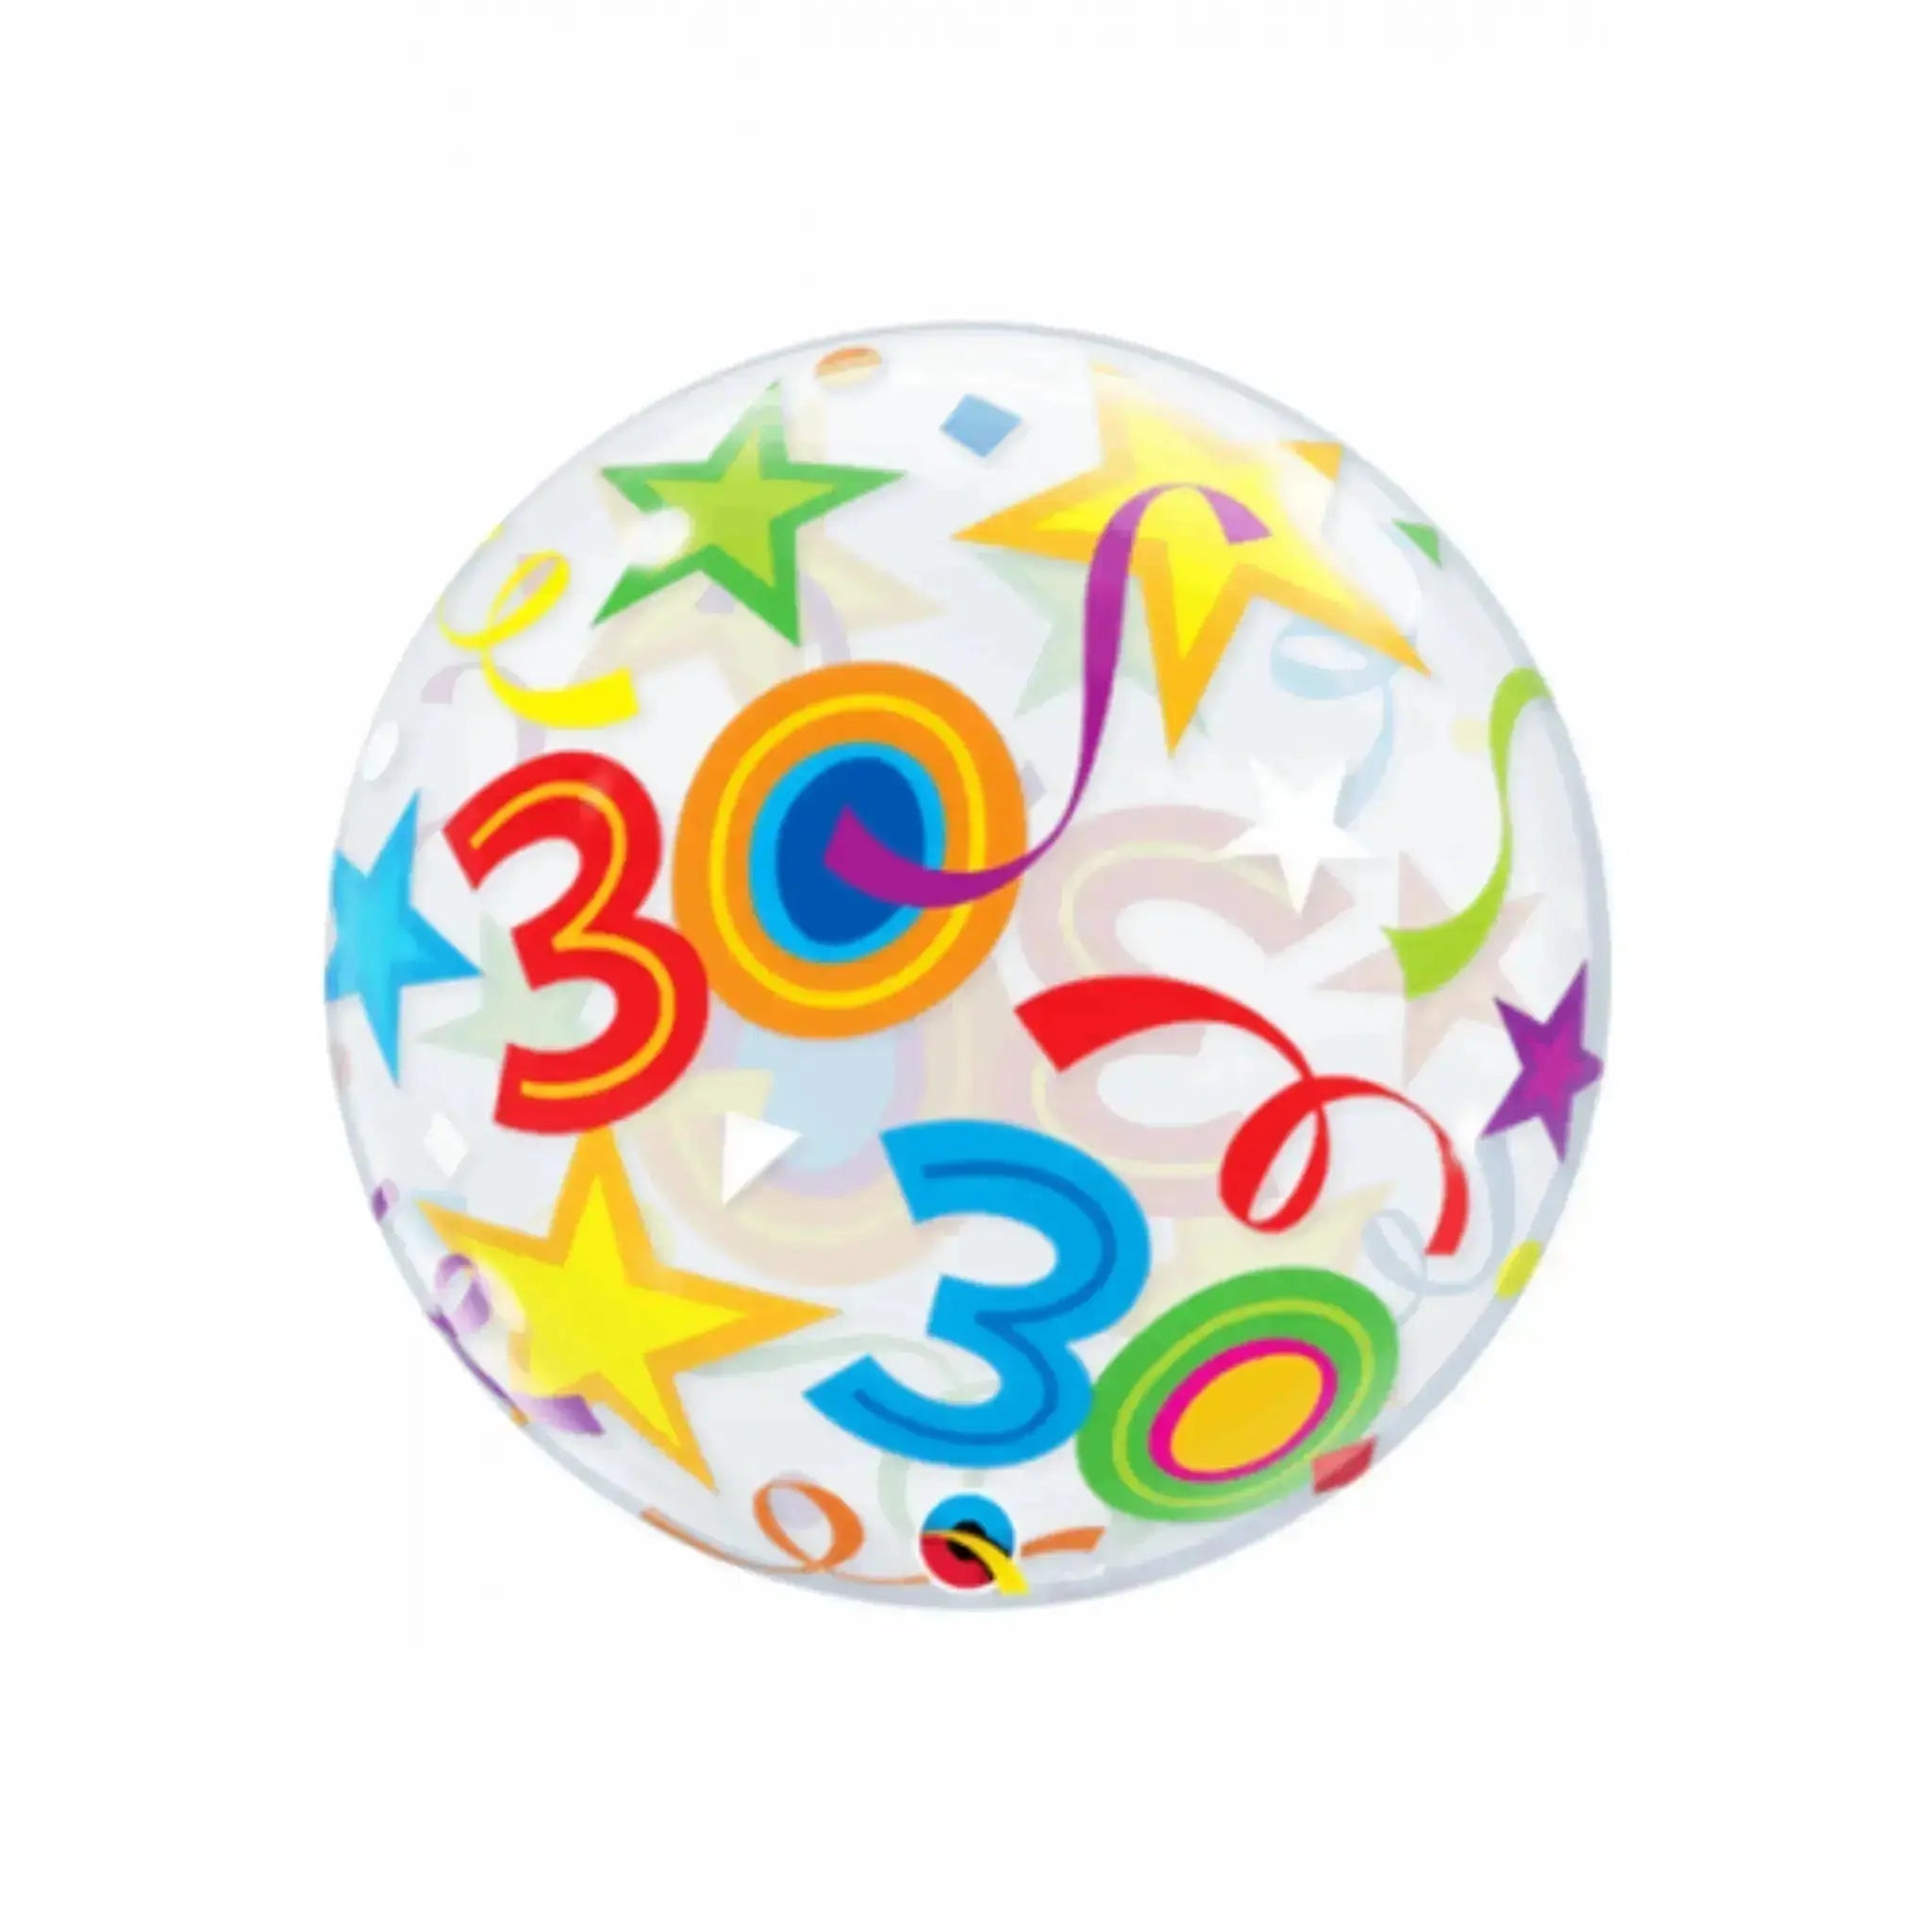 Crazy Colour, Age 30 Balloon | The Party Hut